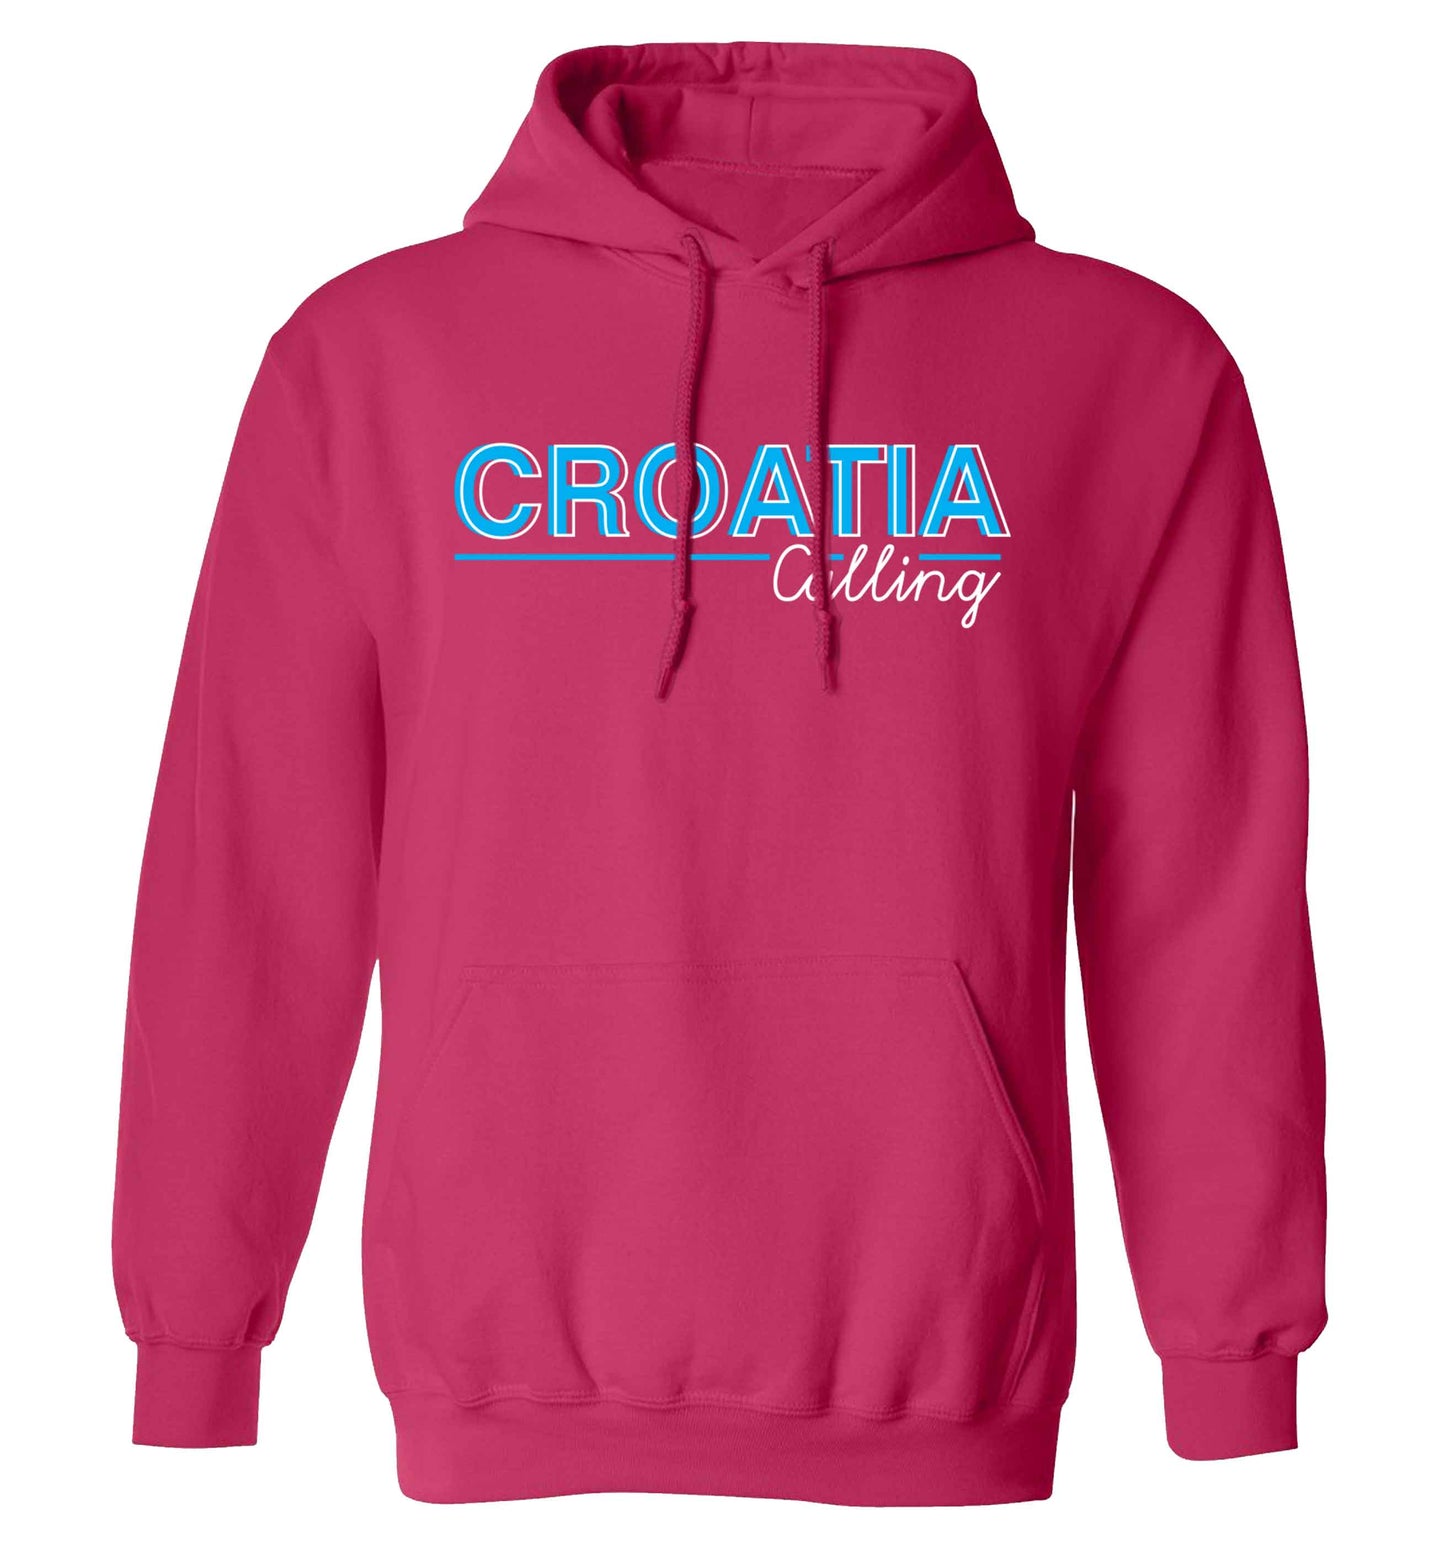 Croatia calling adults unisex pink hoodie 2XL